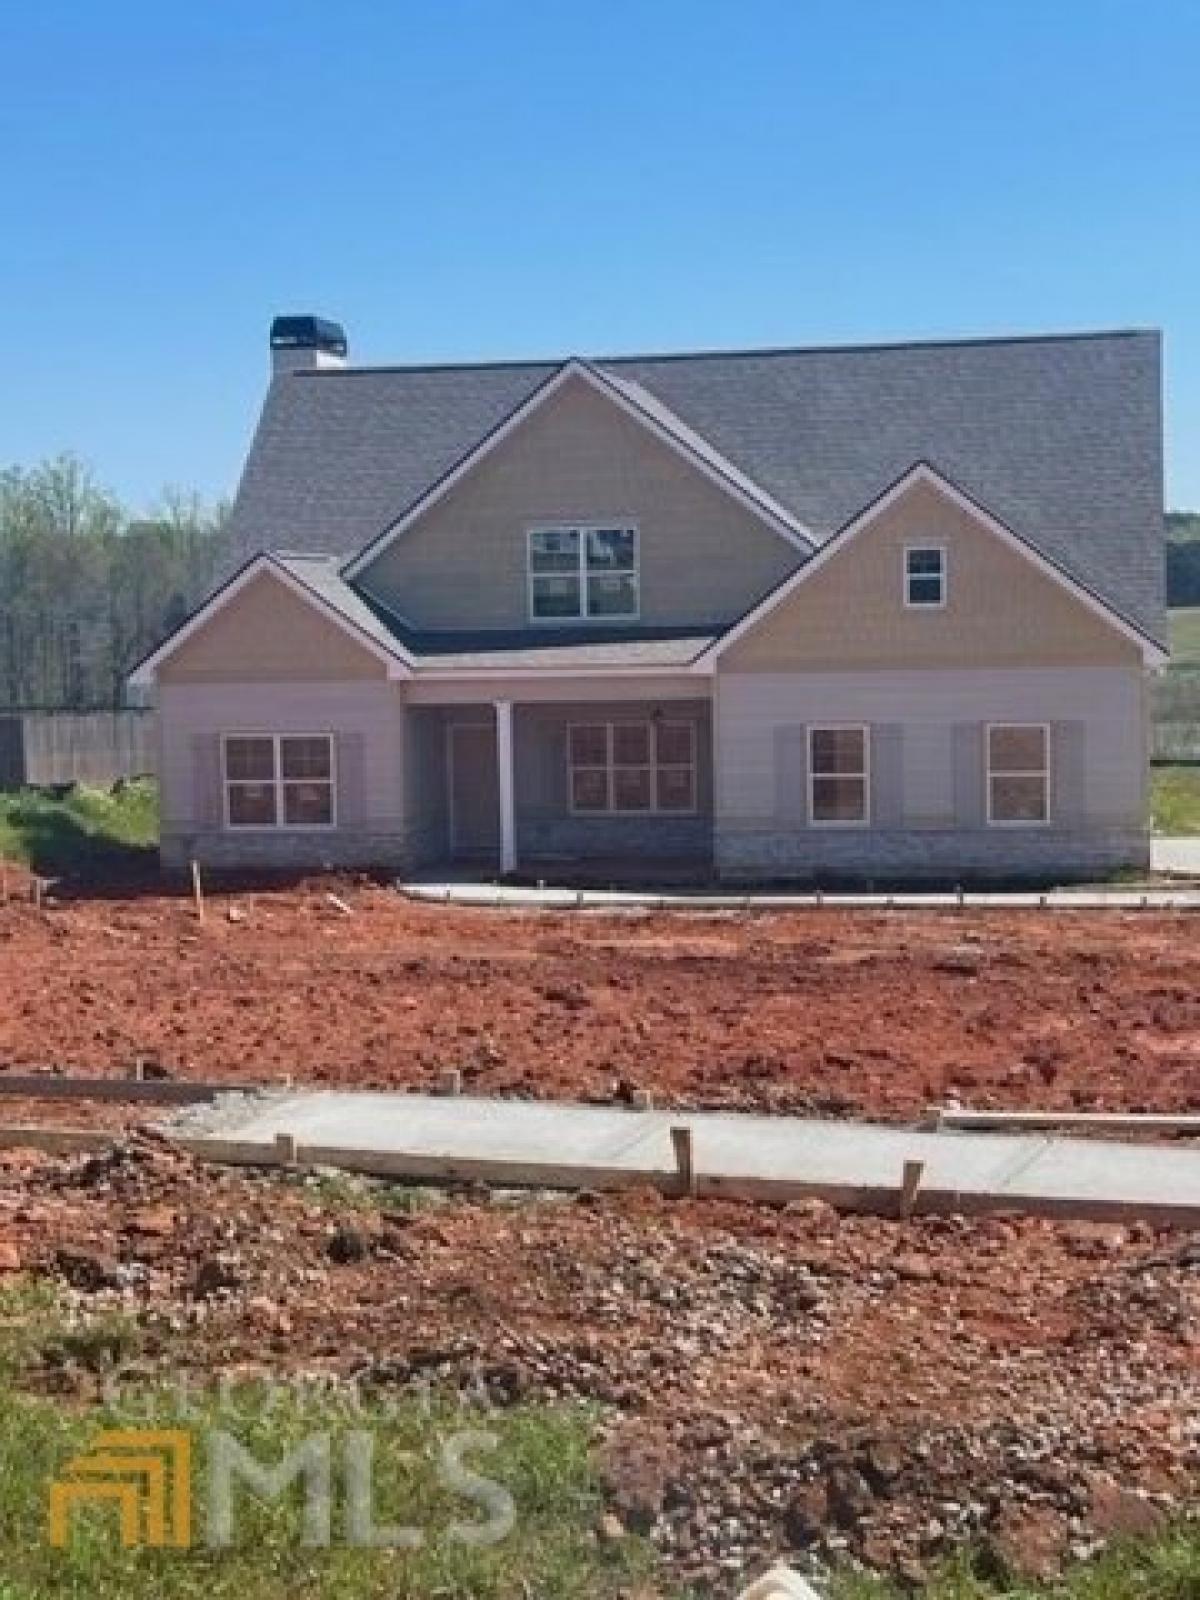 Picture of Home For Sale in Senoia, Georgia, United States